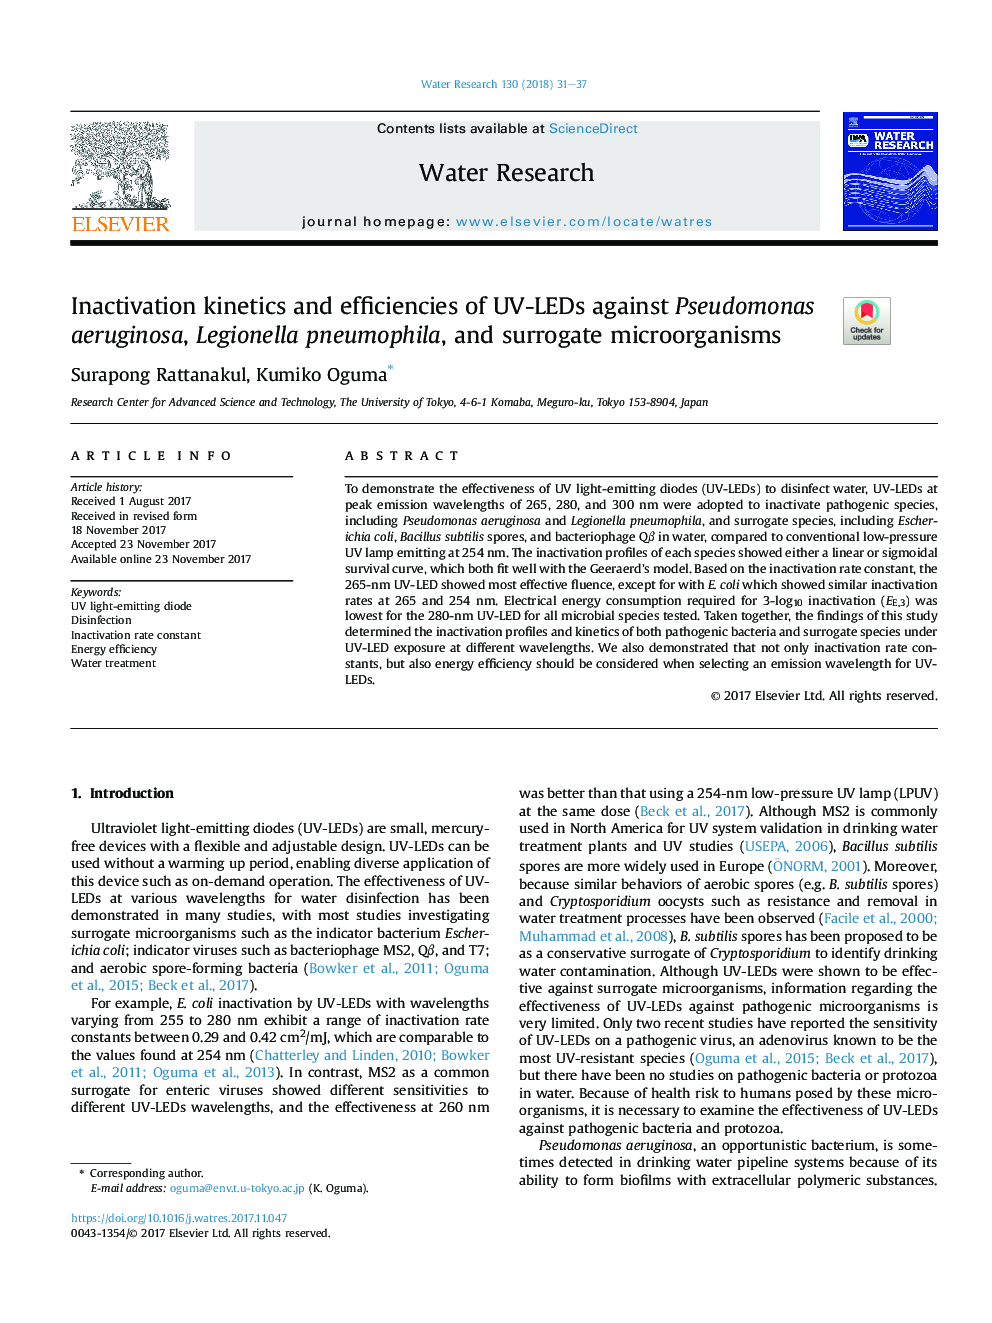 Inactivation kinetics and efficiencies of UV-LEDs against Pseudomonas aeruginosa, Legionella pneumophila, and surrogate microorganisms